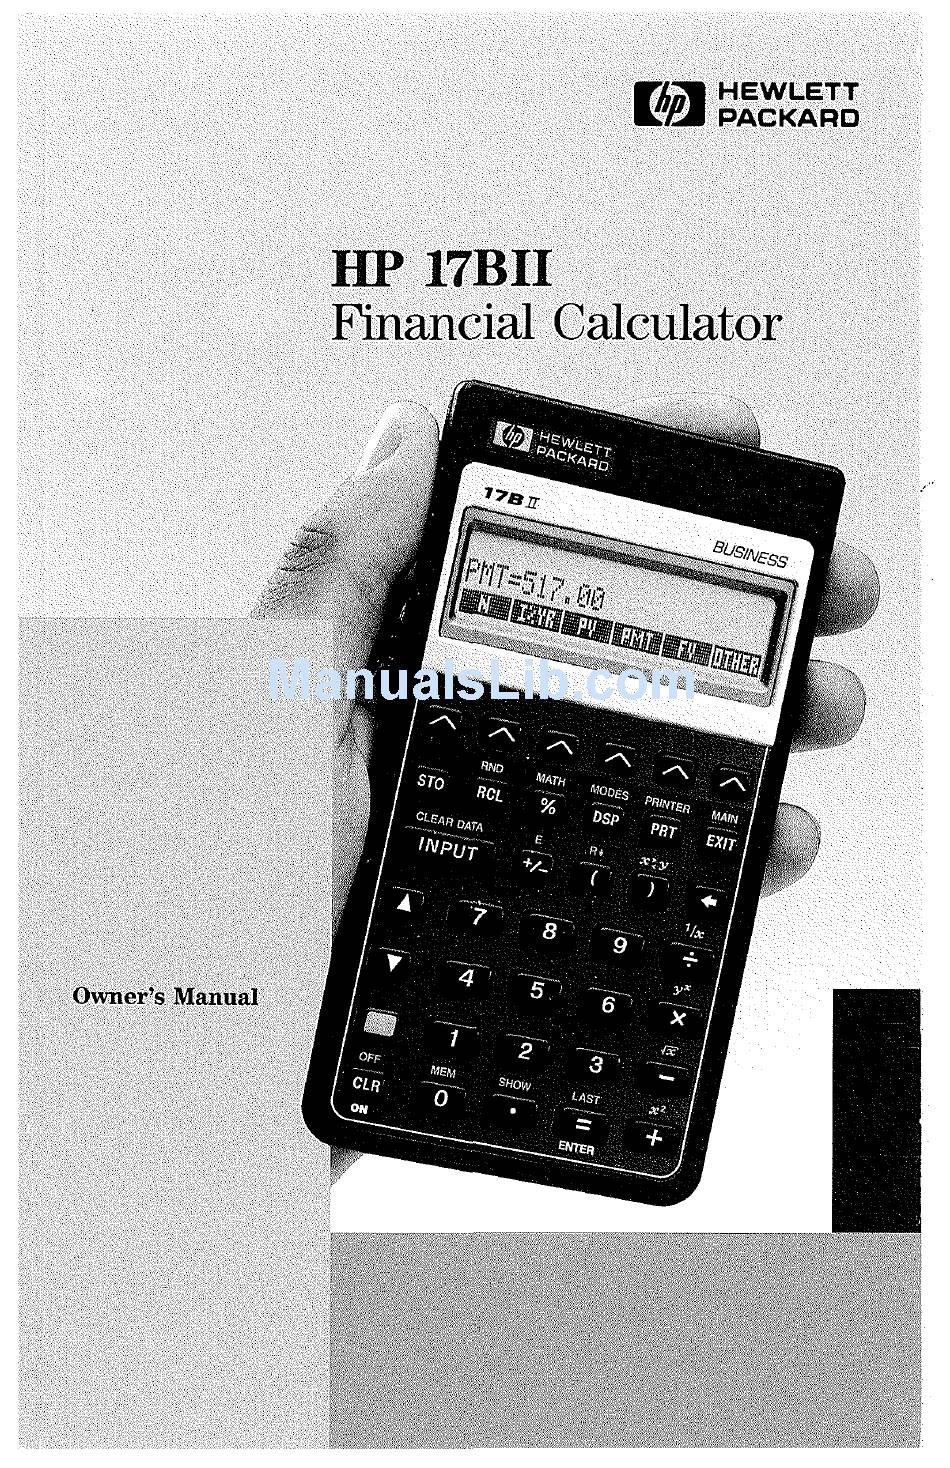 details Overleven paddestoel HP 17BII - FINANCIAL CALCULATOR OWNER'S MANUAL Pdf Download | ManualsLib